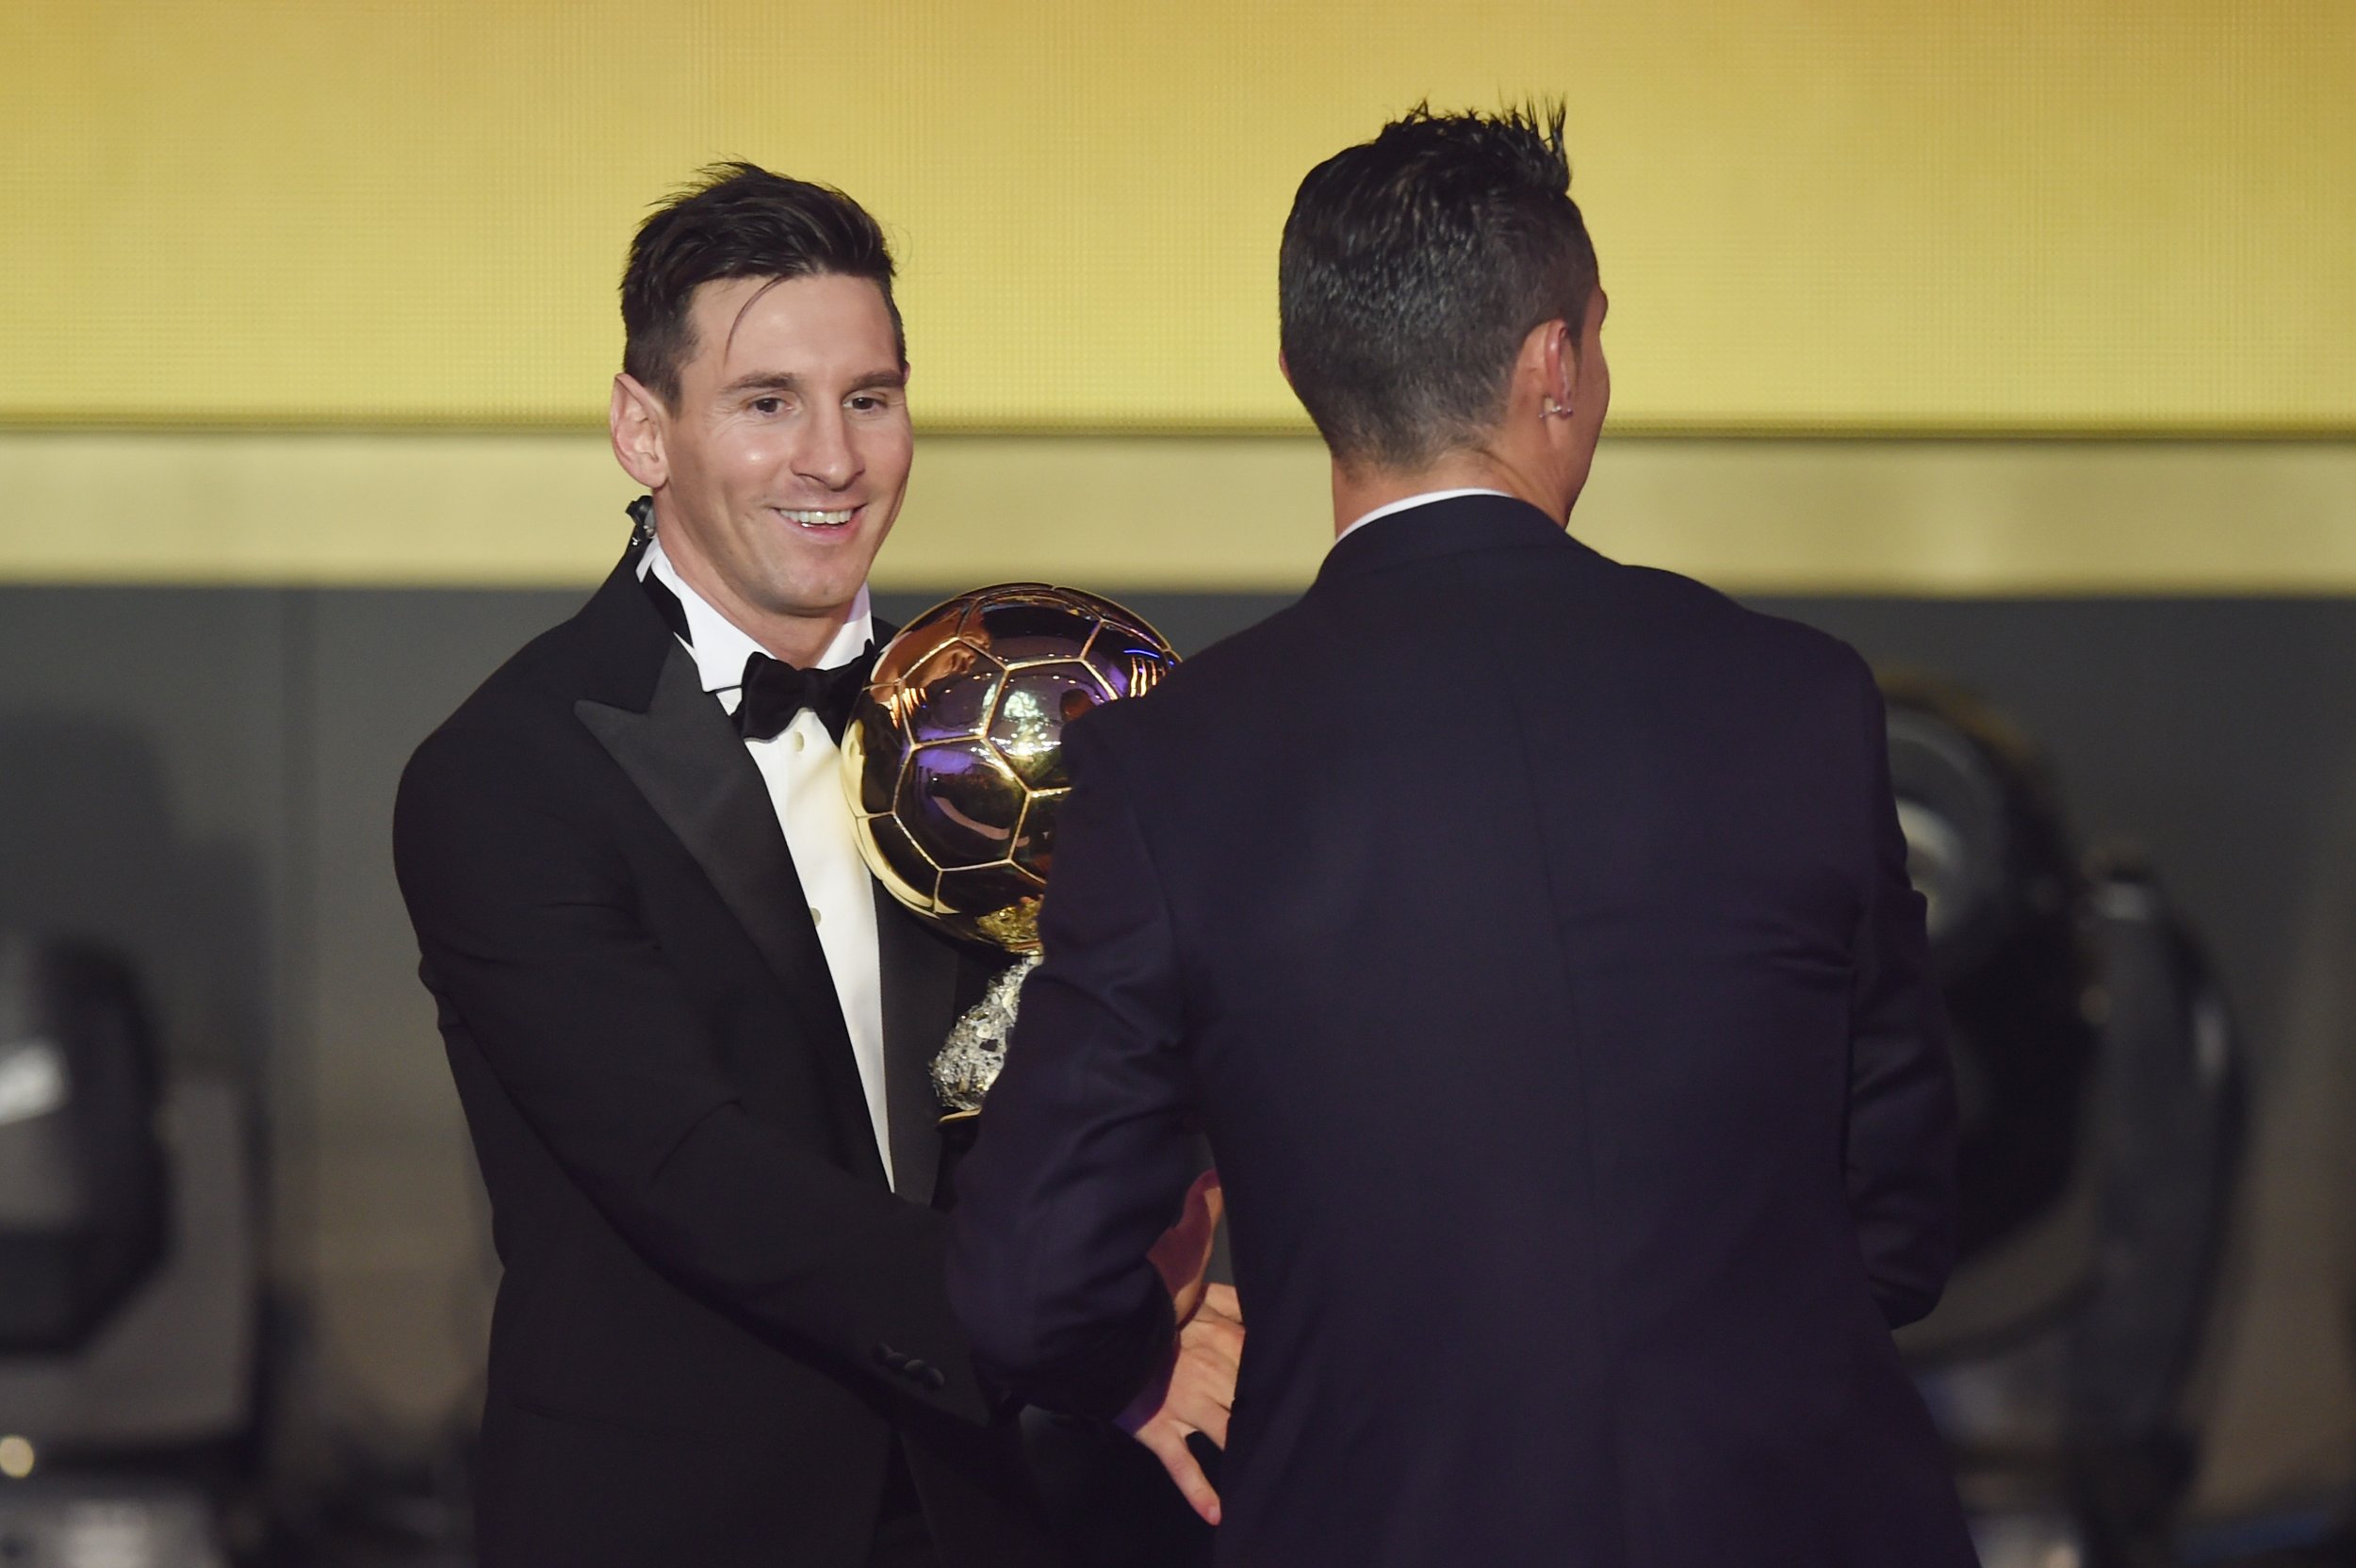 Lionel Messi, left, and Cristiano Ronaldo at the 2015 Ballon d'Or ceremony in Zurich.